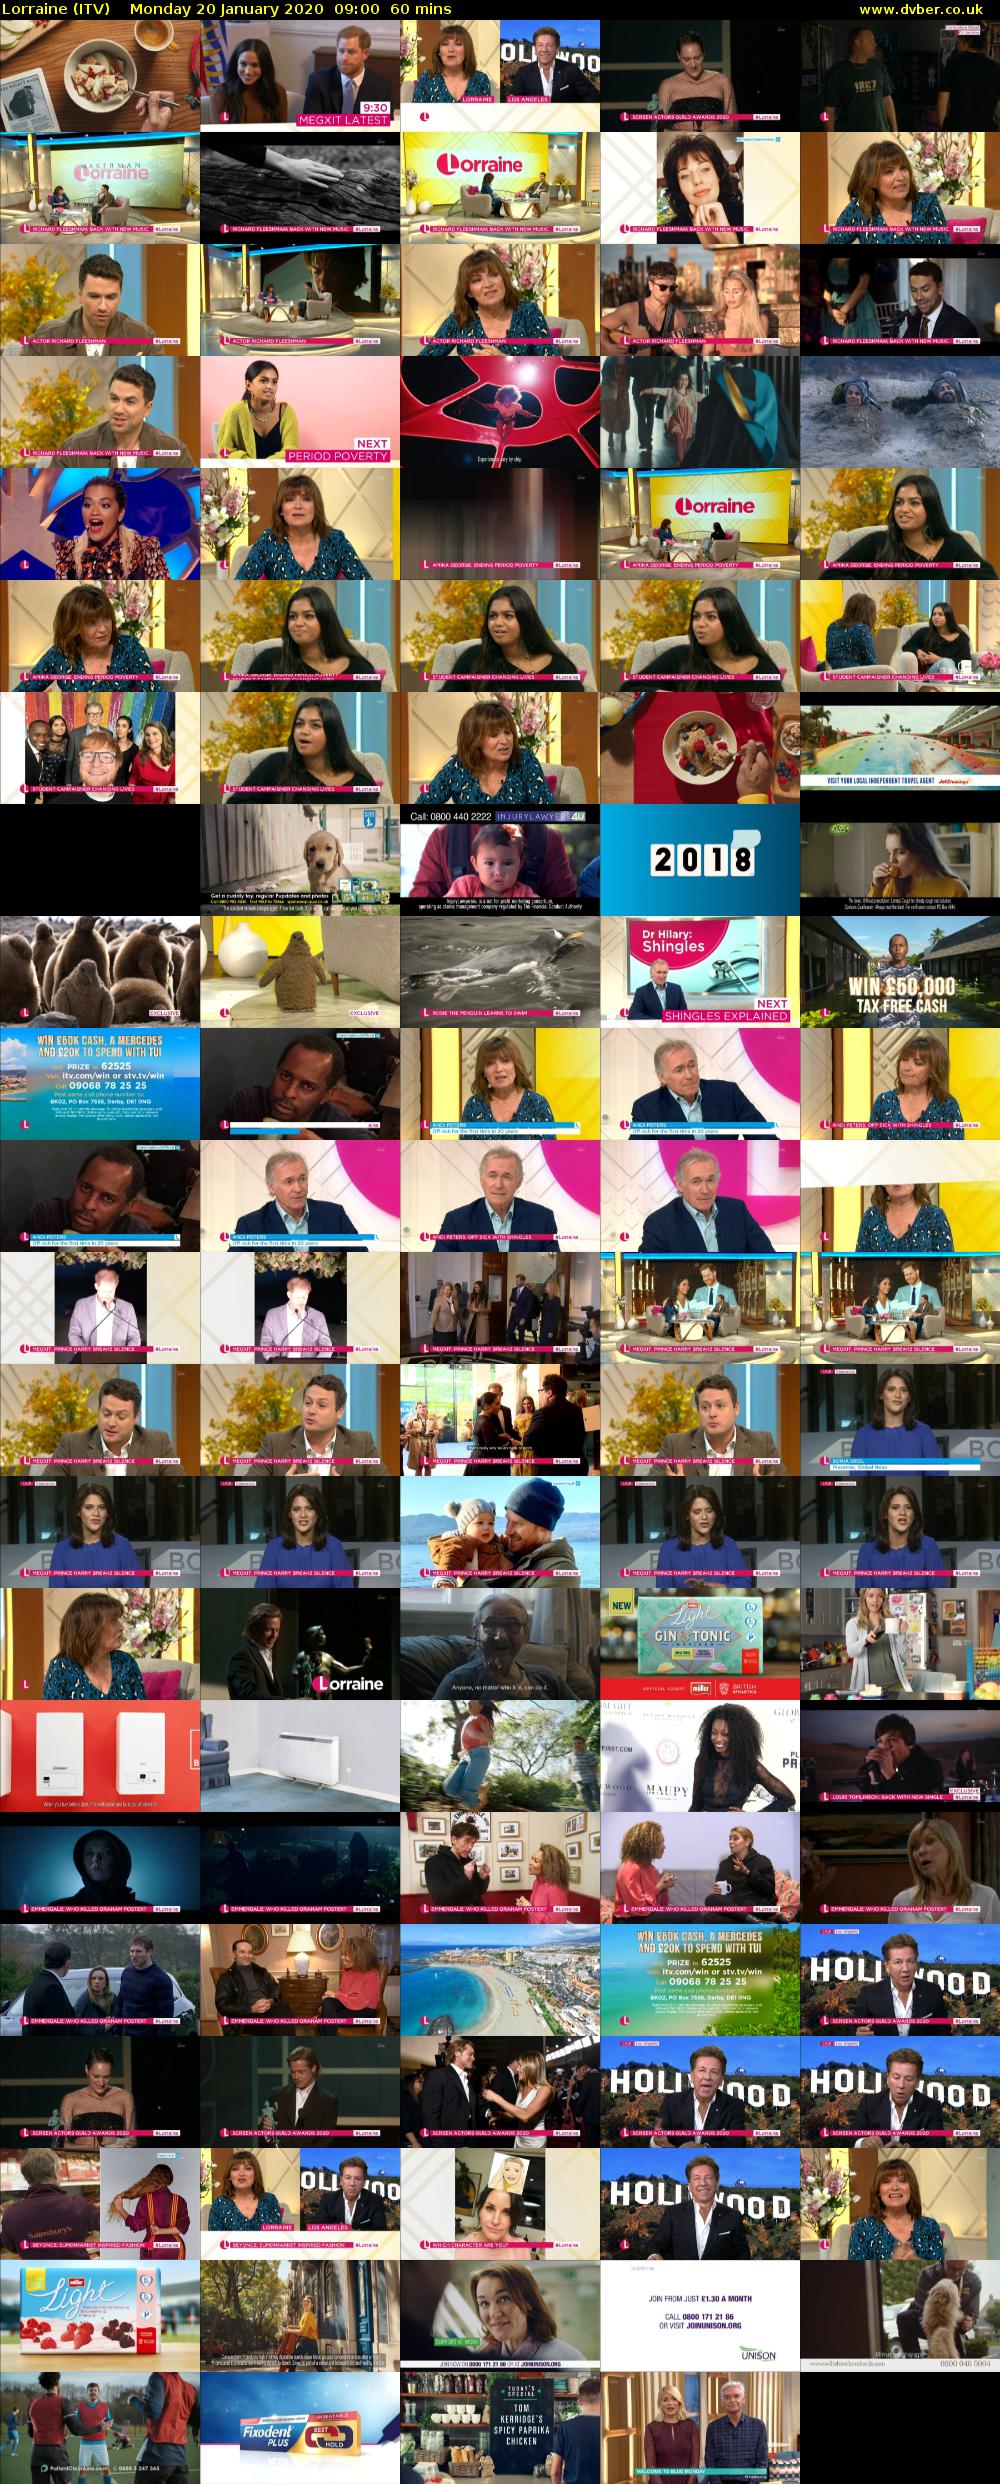 Lorraine (ITV) Monday 20 January 2020 09:00 - 10:00